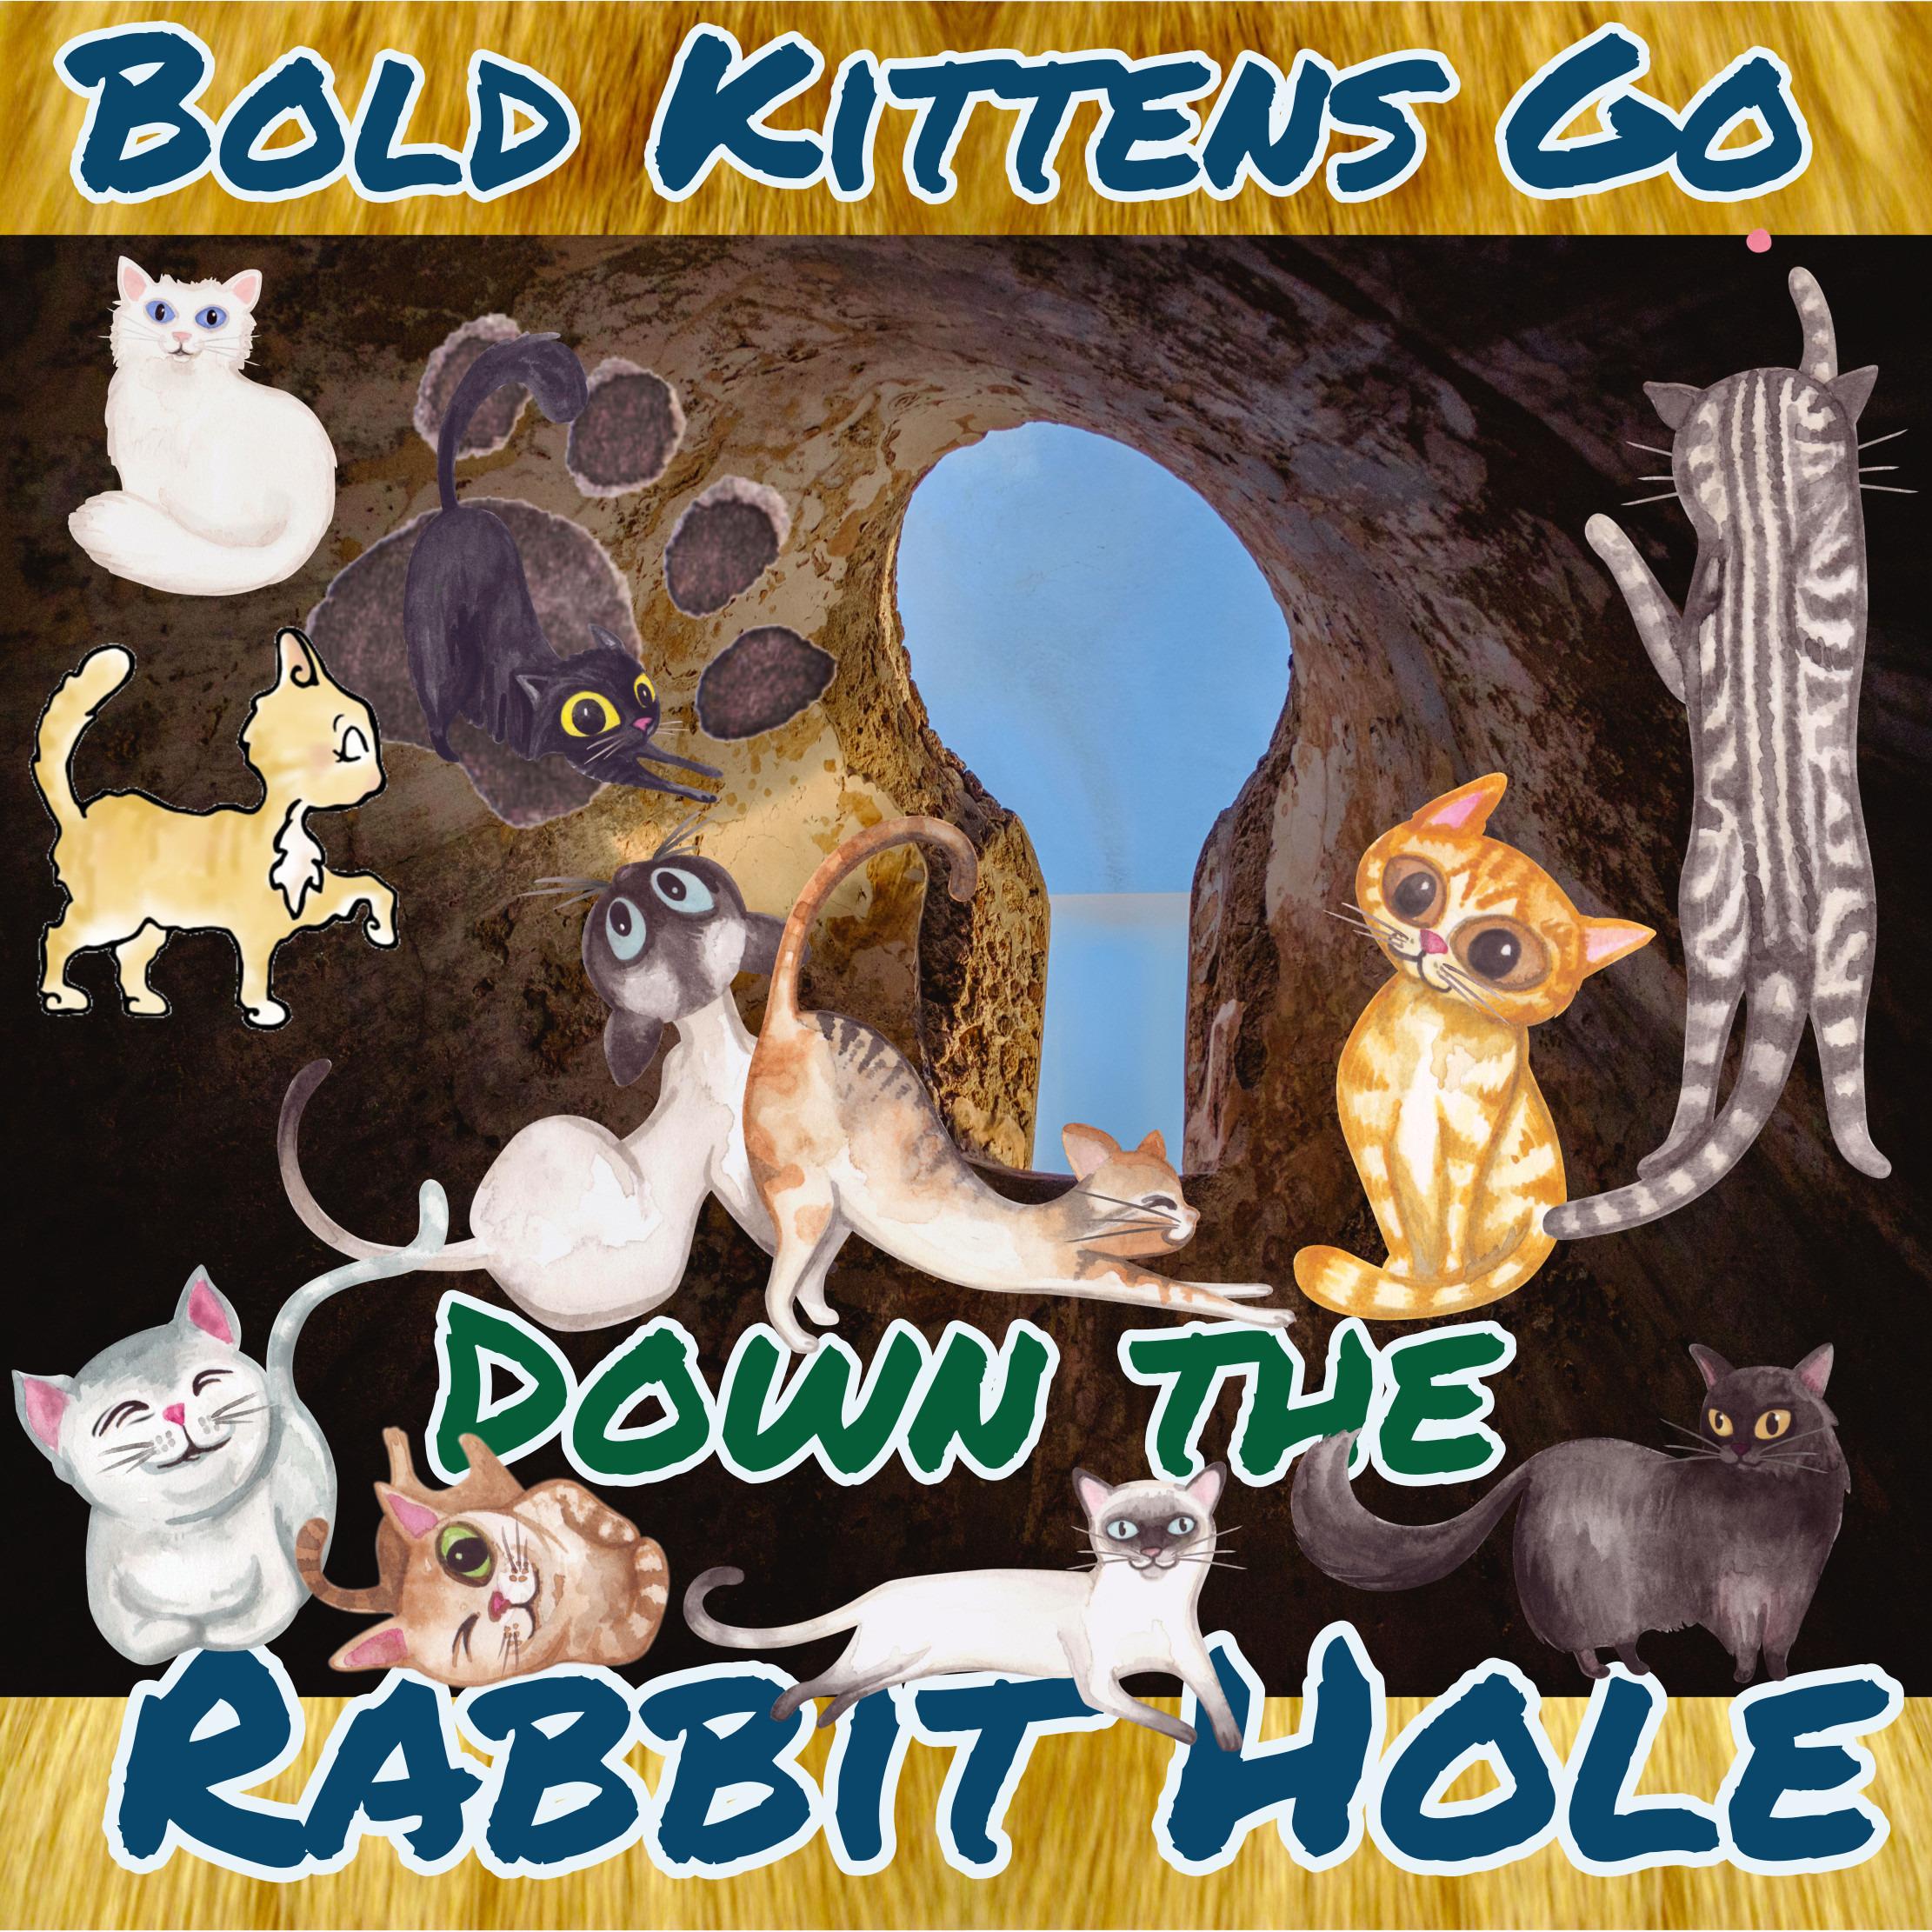 Bold Kittens Go Down the Rabbit Hole